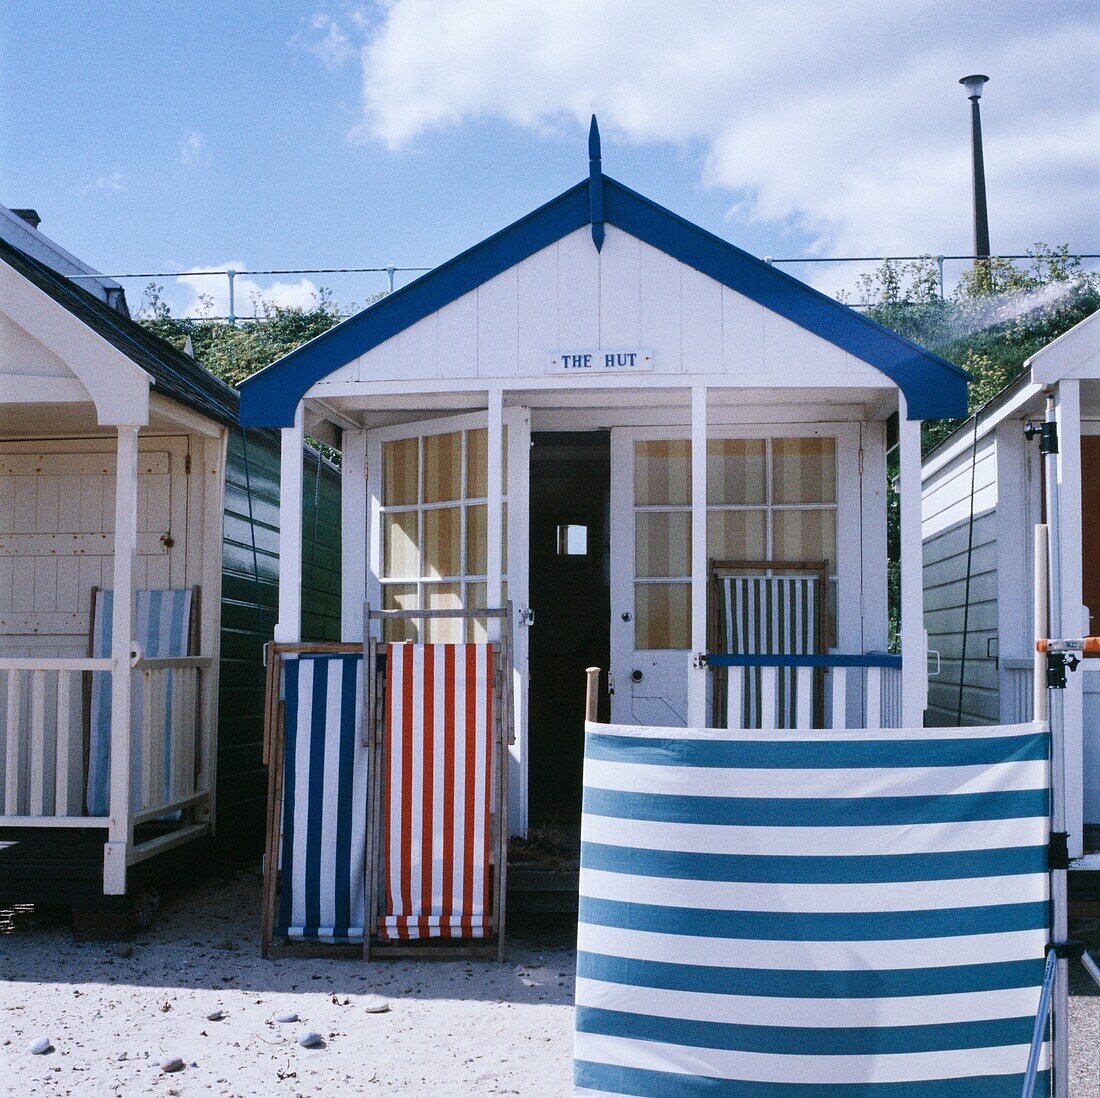 British beach hut with striped windbreaker